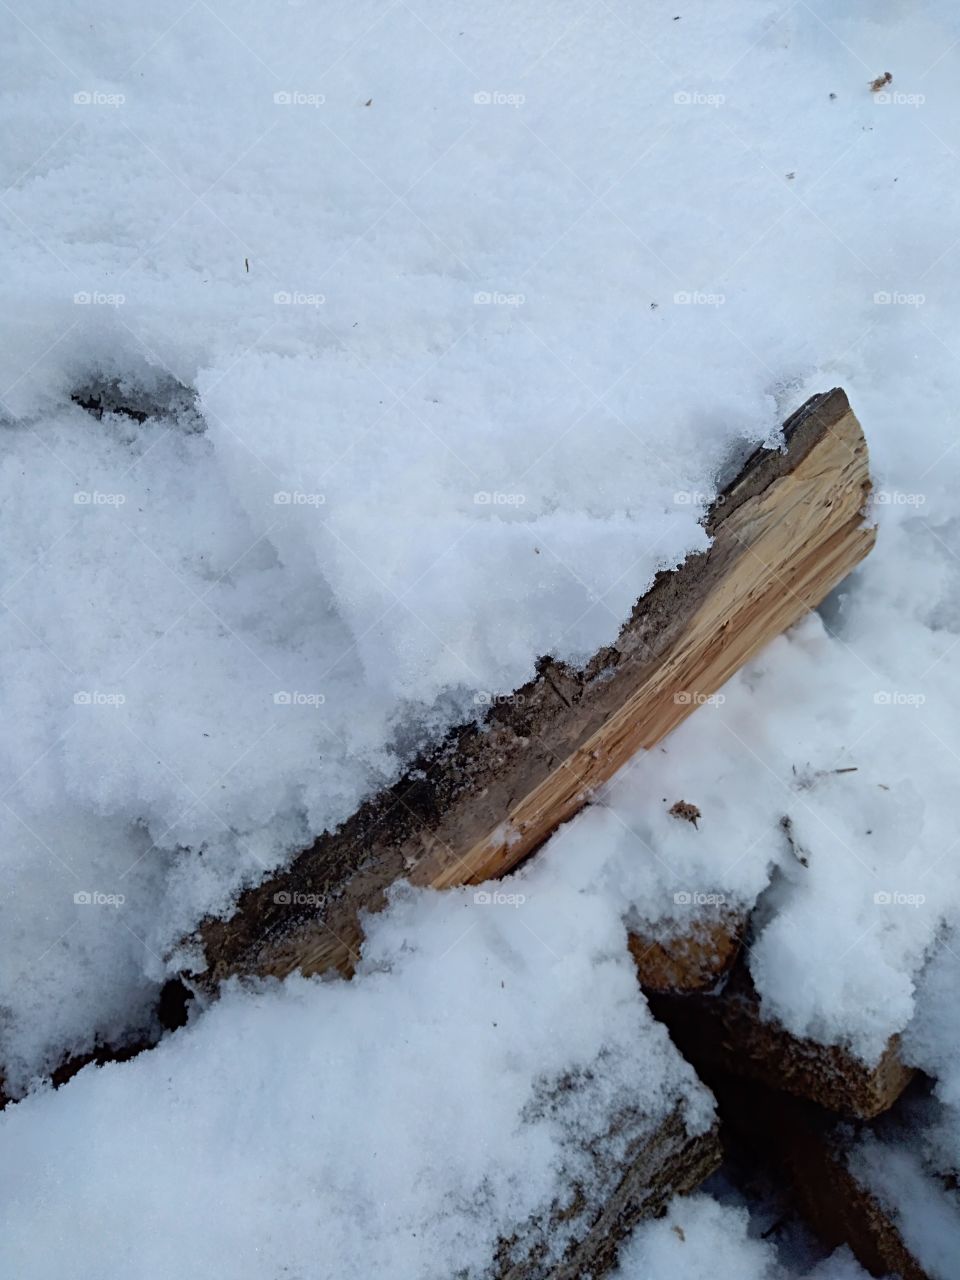 Piece of wood under snow